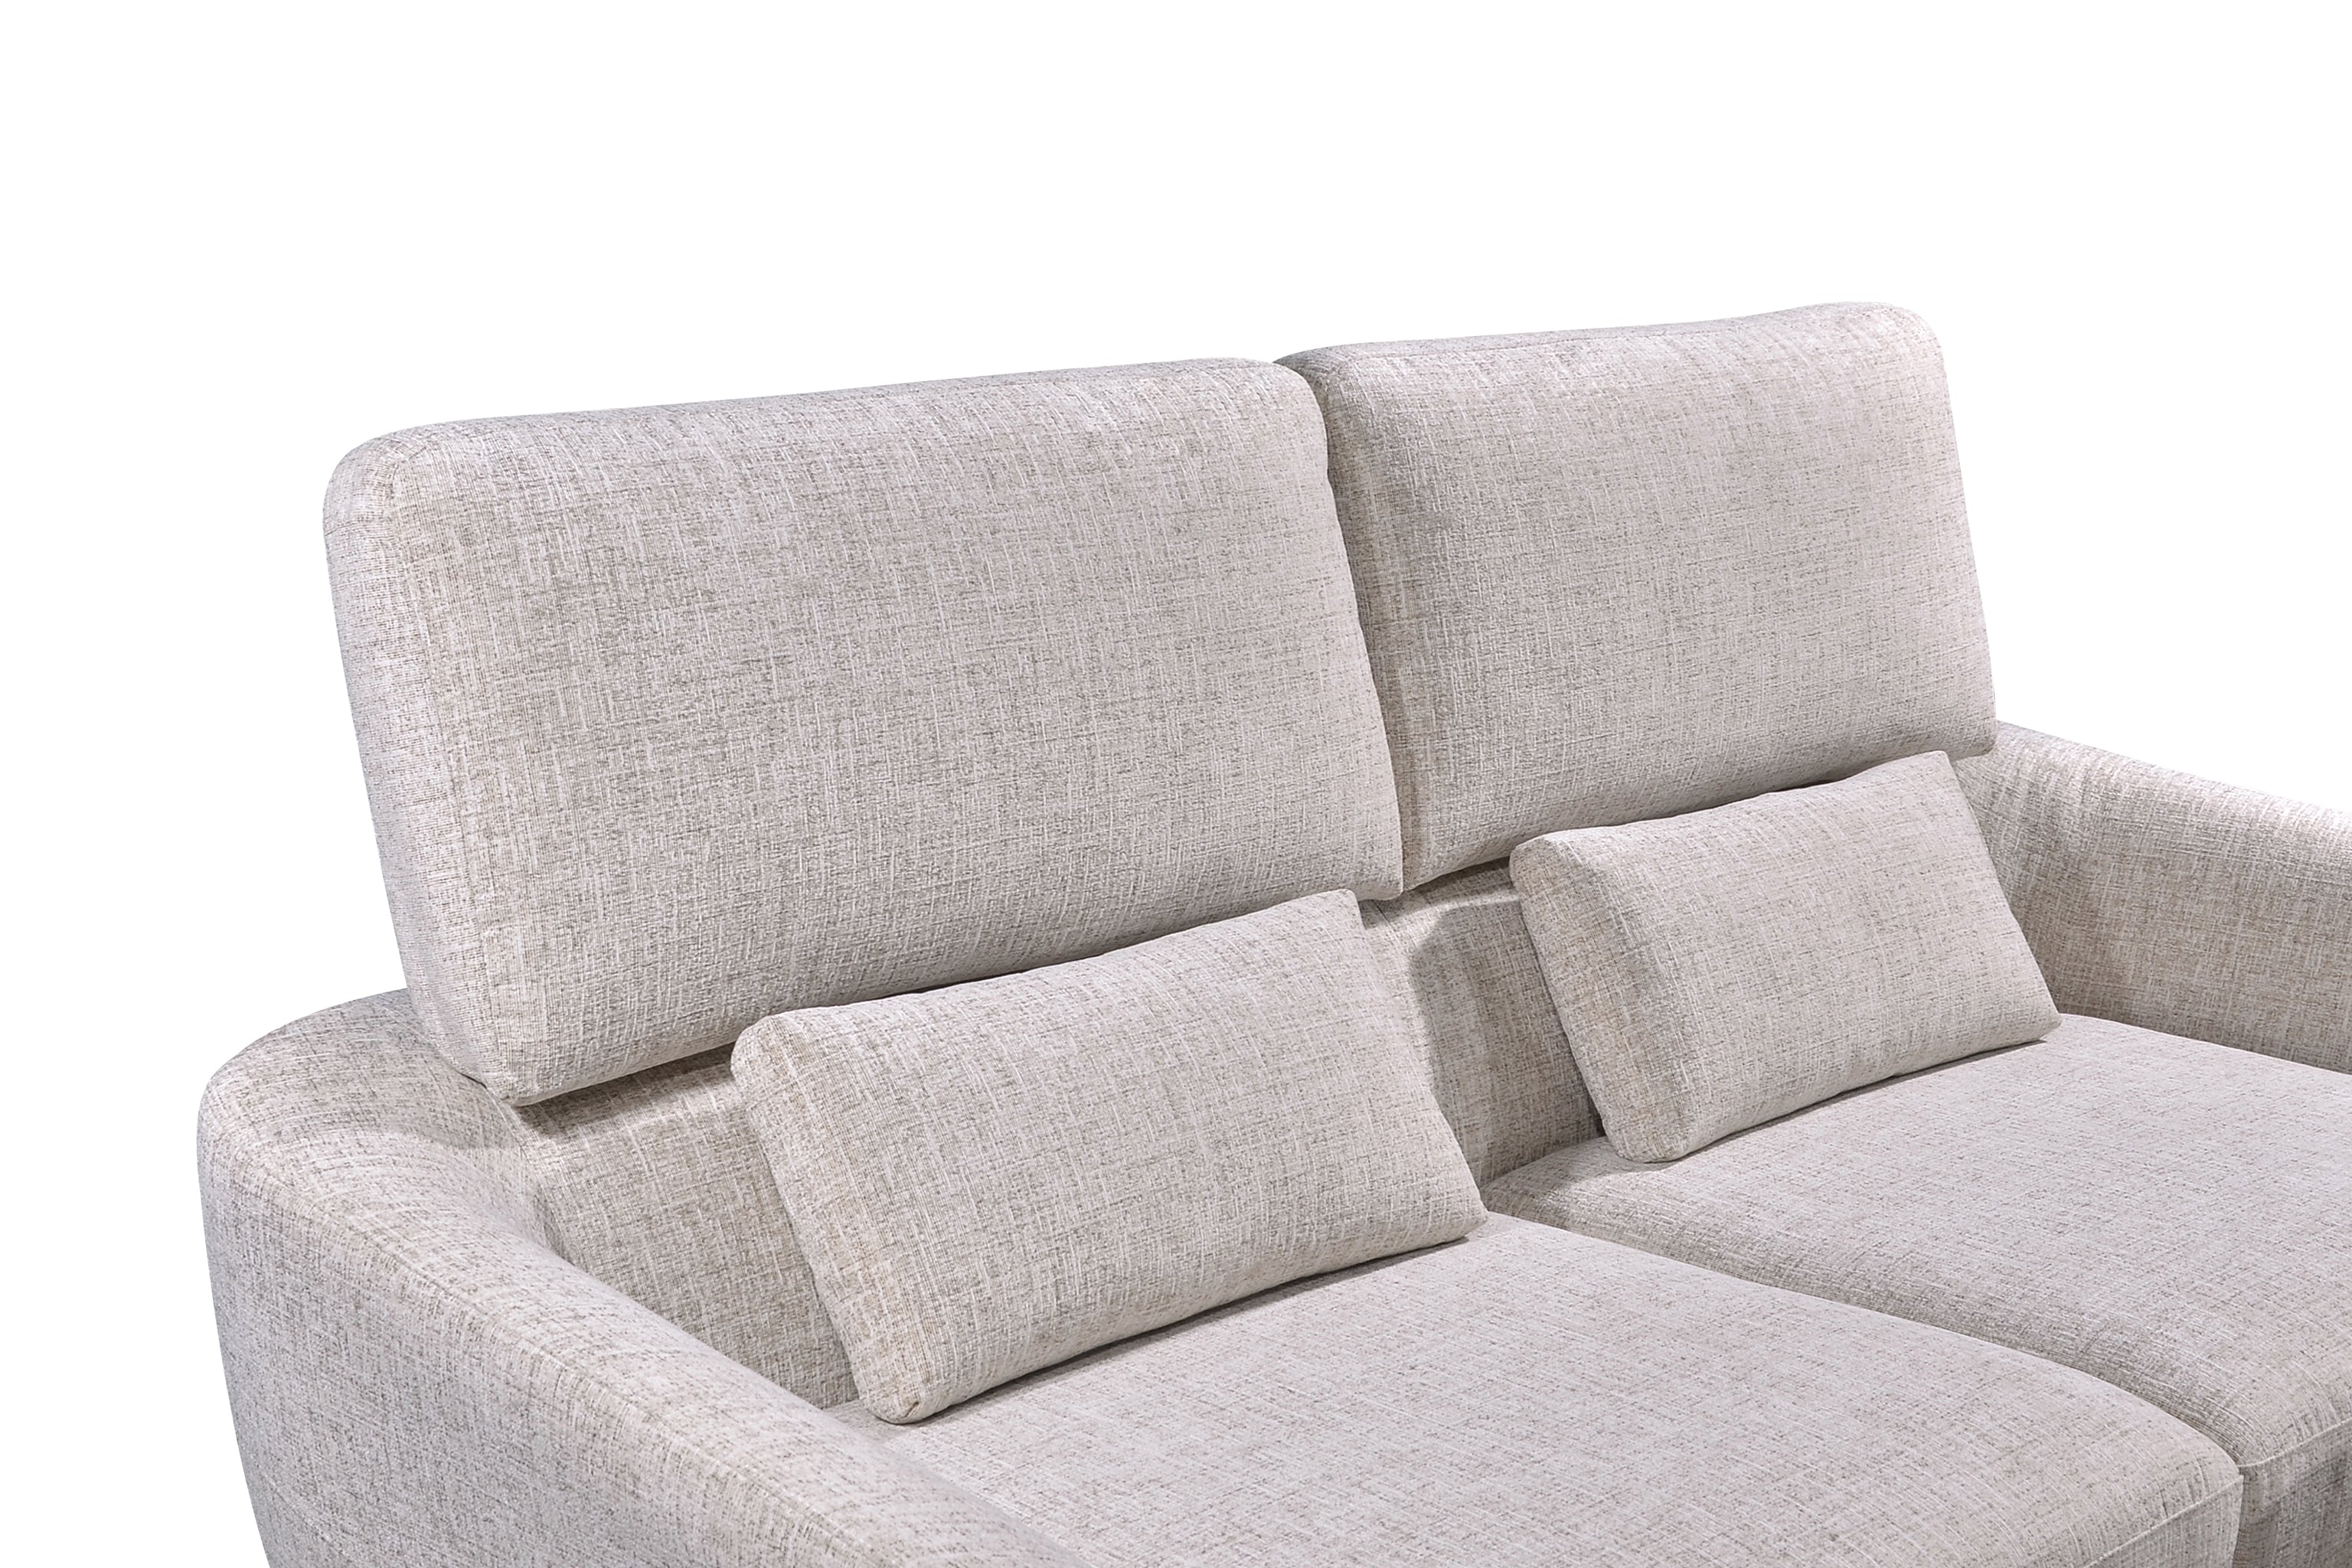 HELIOS 3 Seater Sofa in Fabric by Castilla